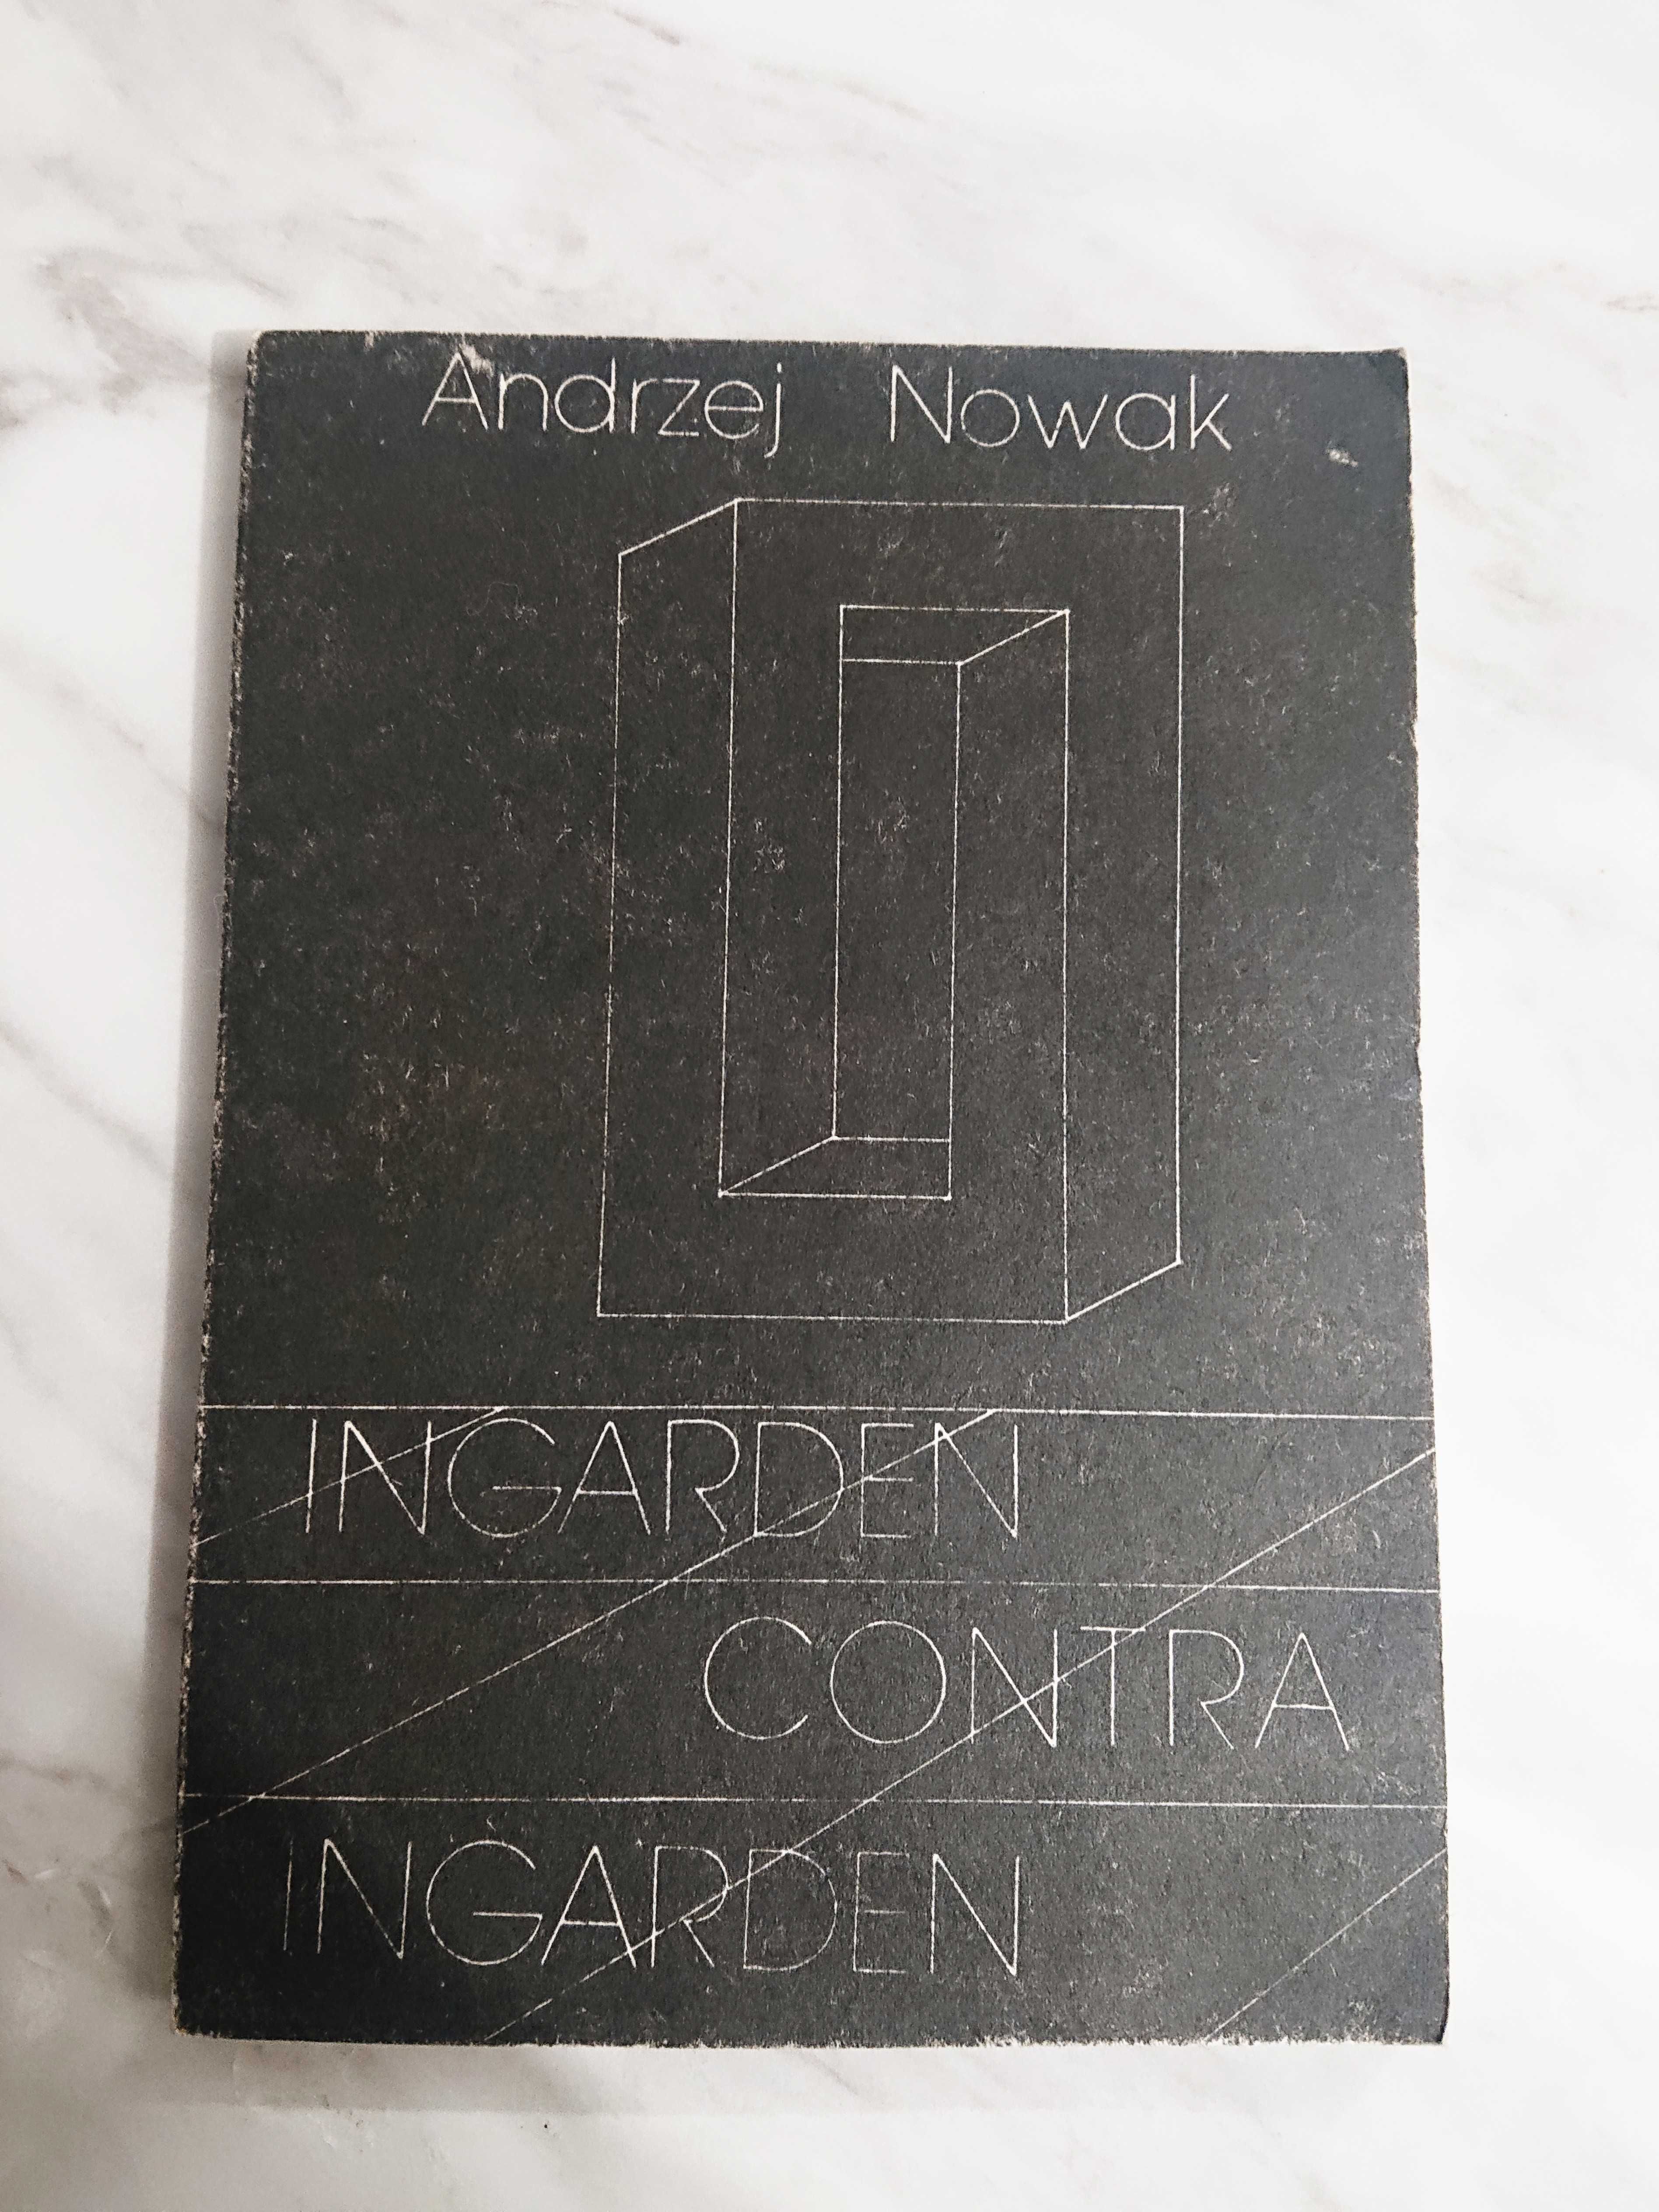 Andrzej Nowak Ingarden contra ingarden